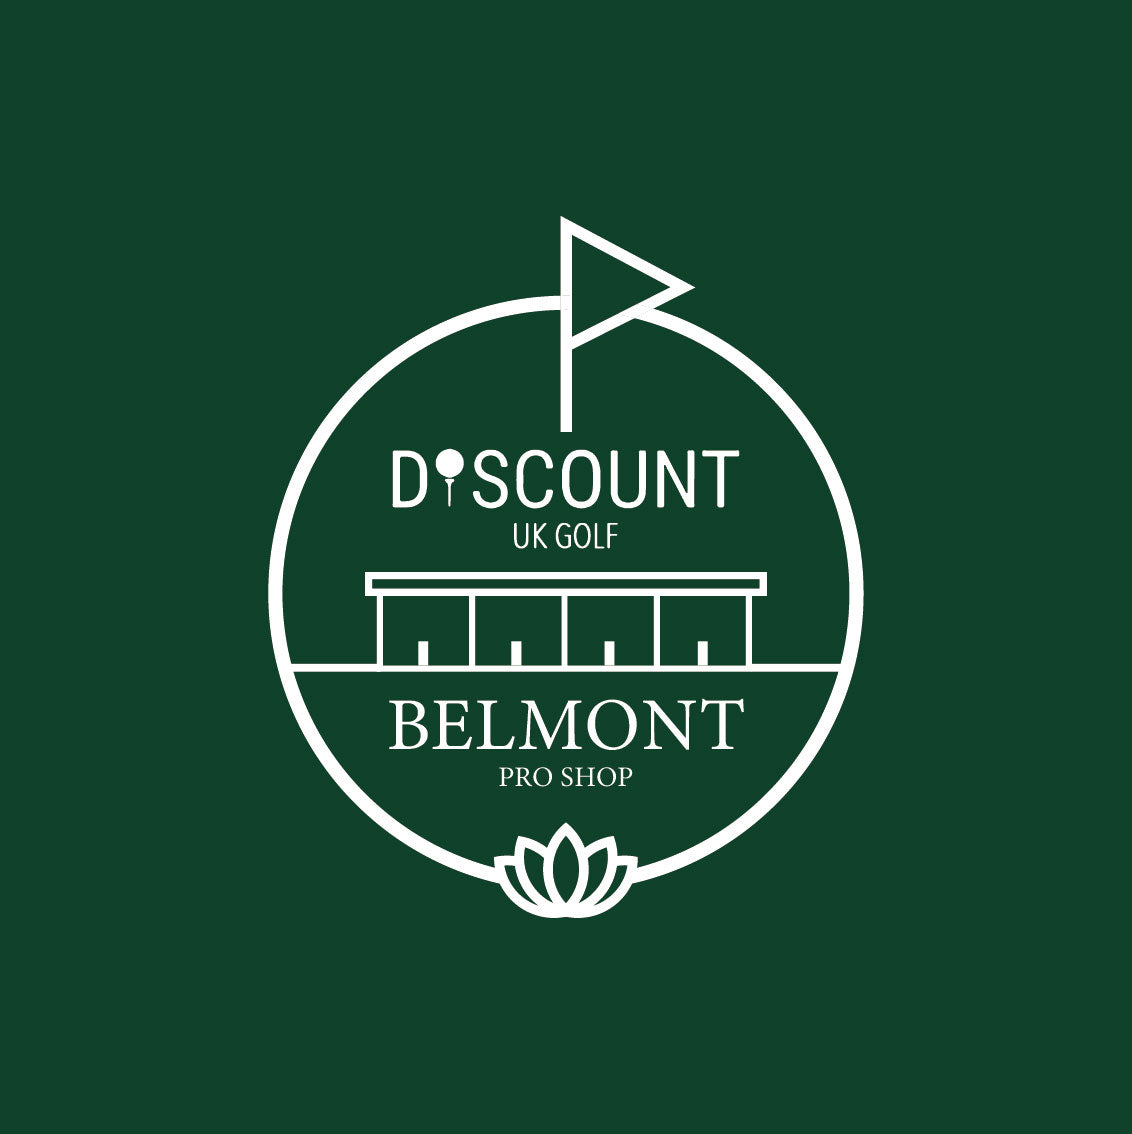 Discount UK Golf announces partnership with Belmont Driving Range